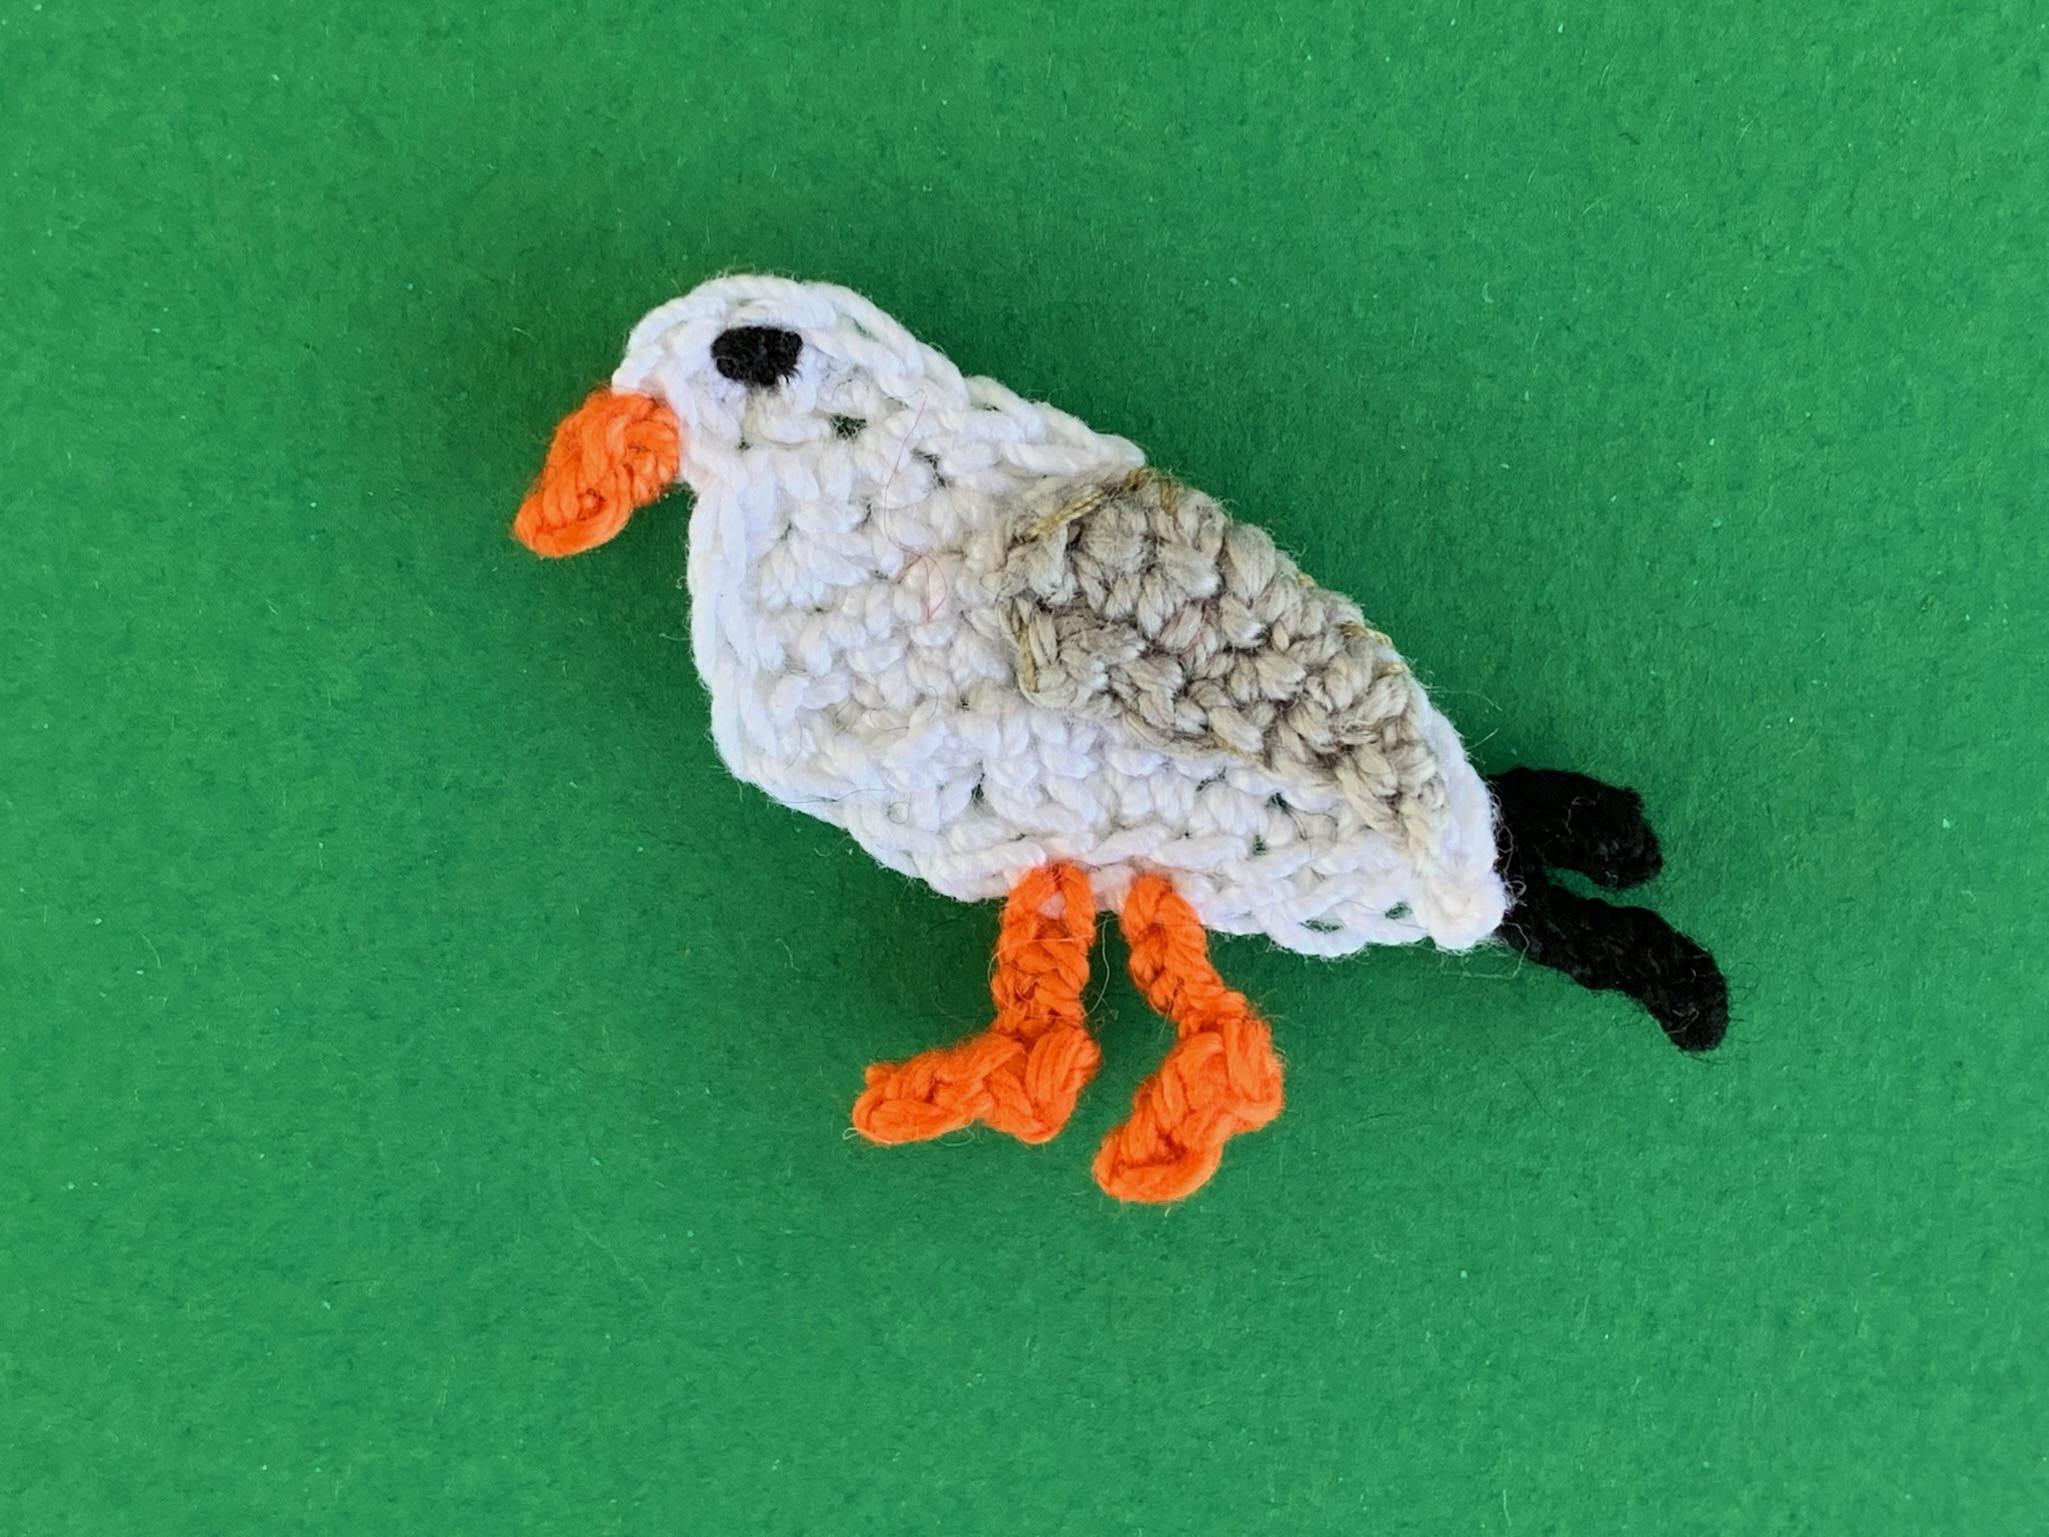 Finished crochet seagull 2 ply landscape